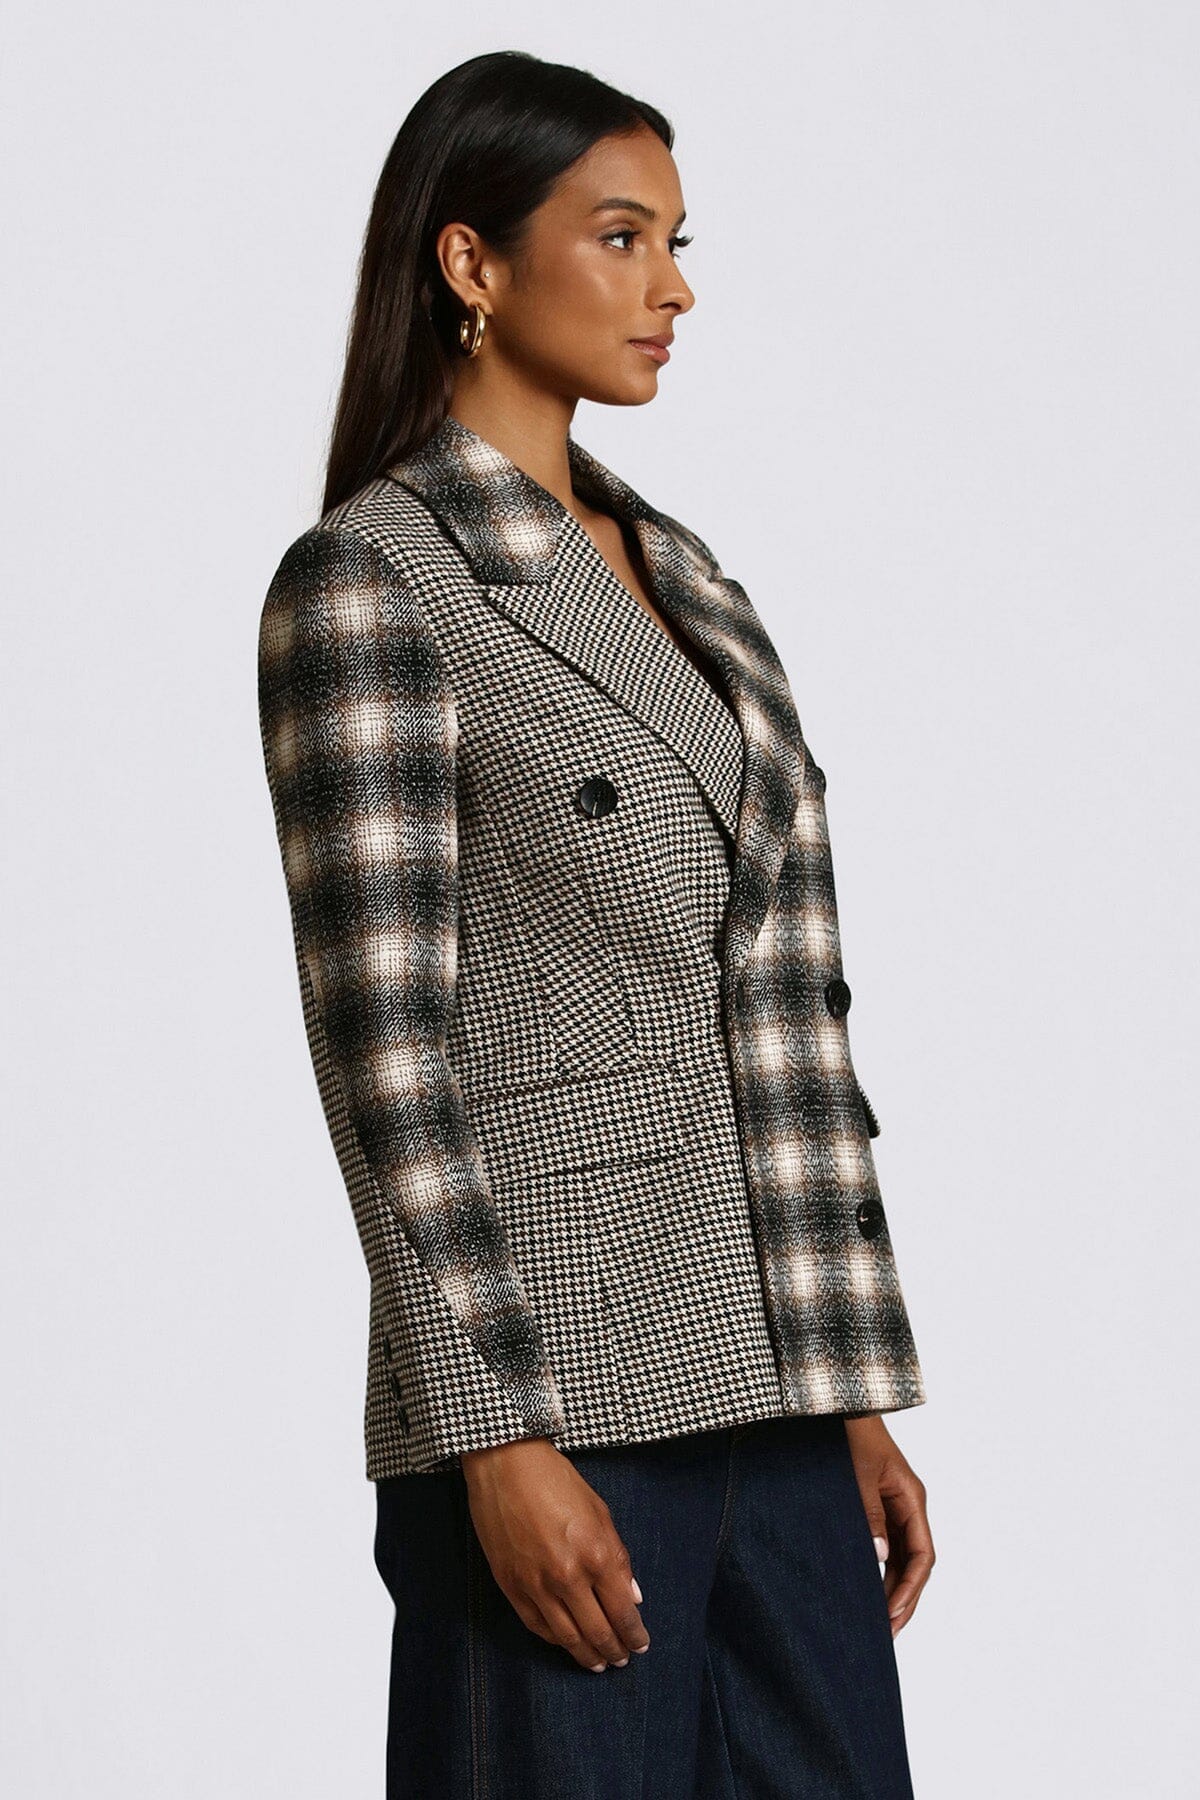 Black white brown mixed pattern double breasted blazer jacket coat - figure flattering fall 2023 date night blazers jackets for women